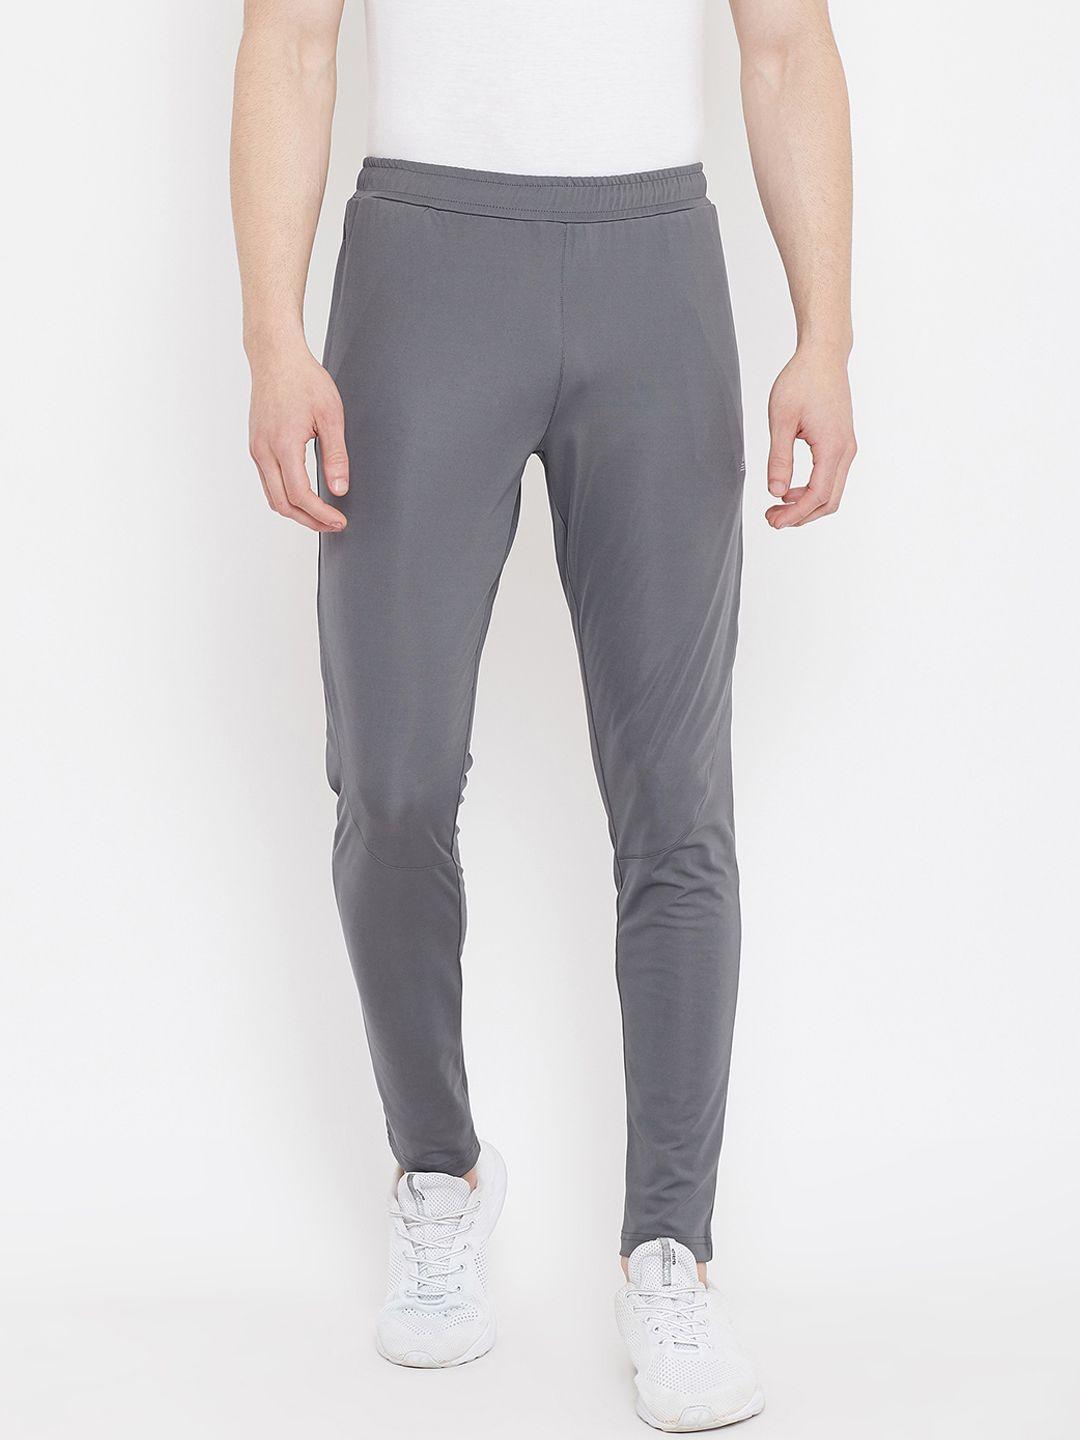 athlisis-men-grey-solid-slim-fit-track-pants